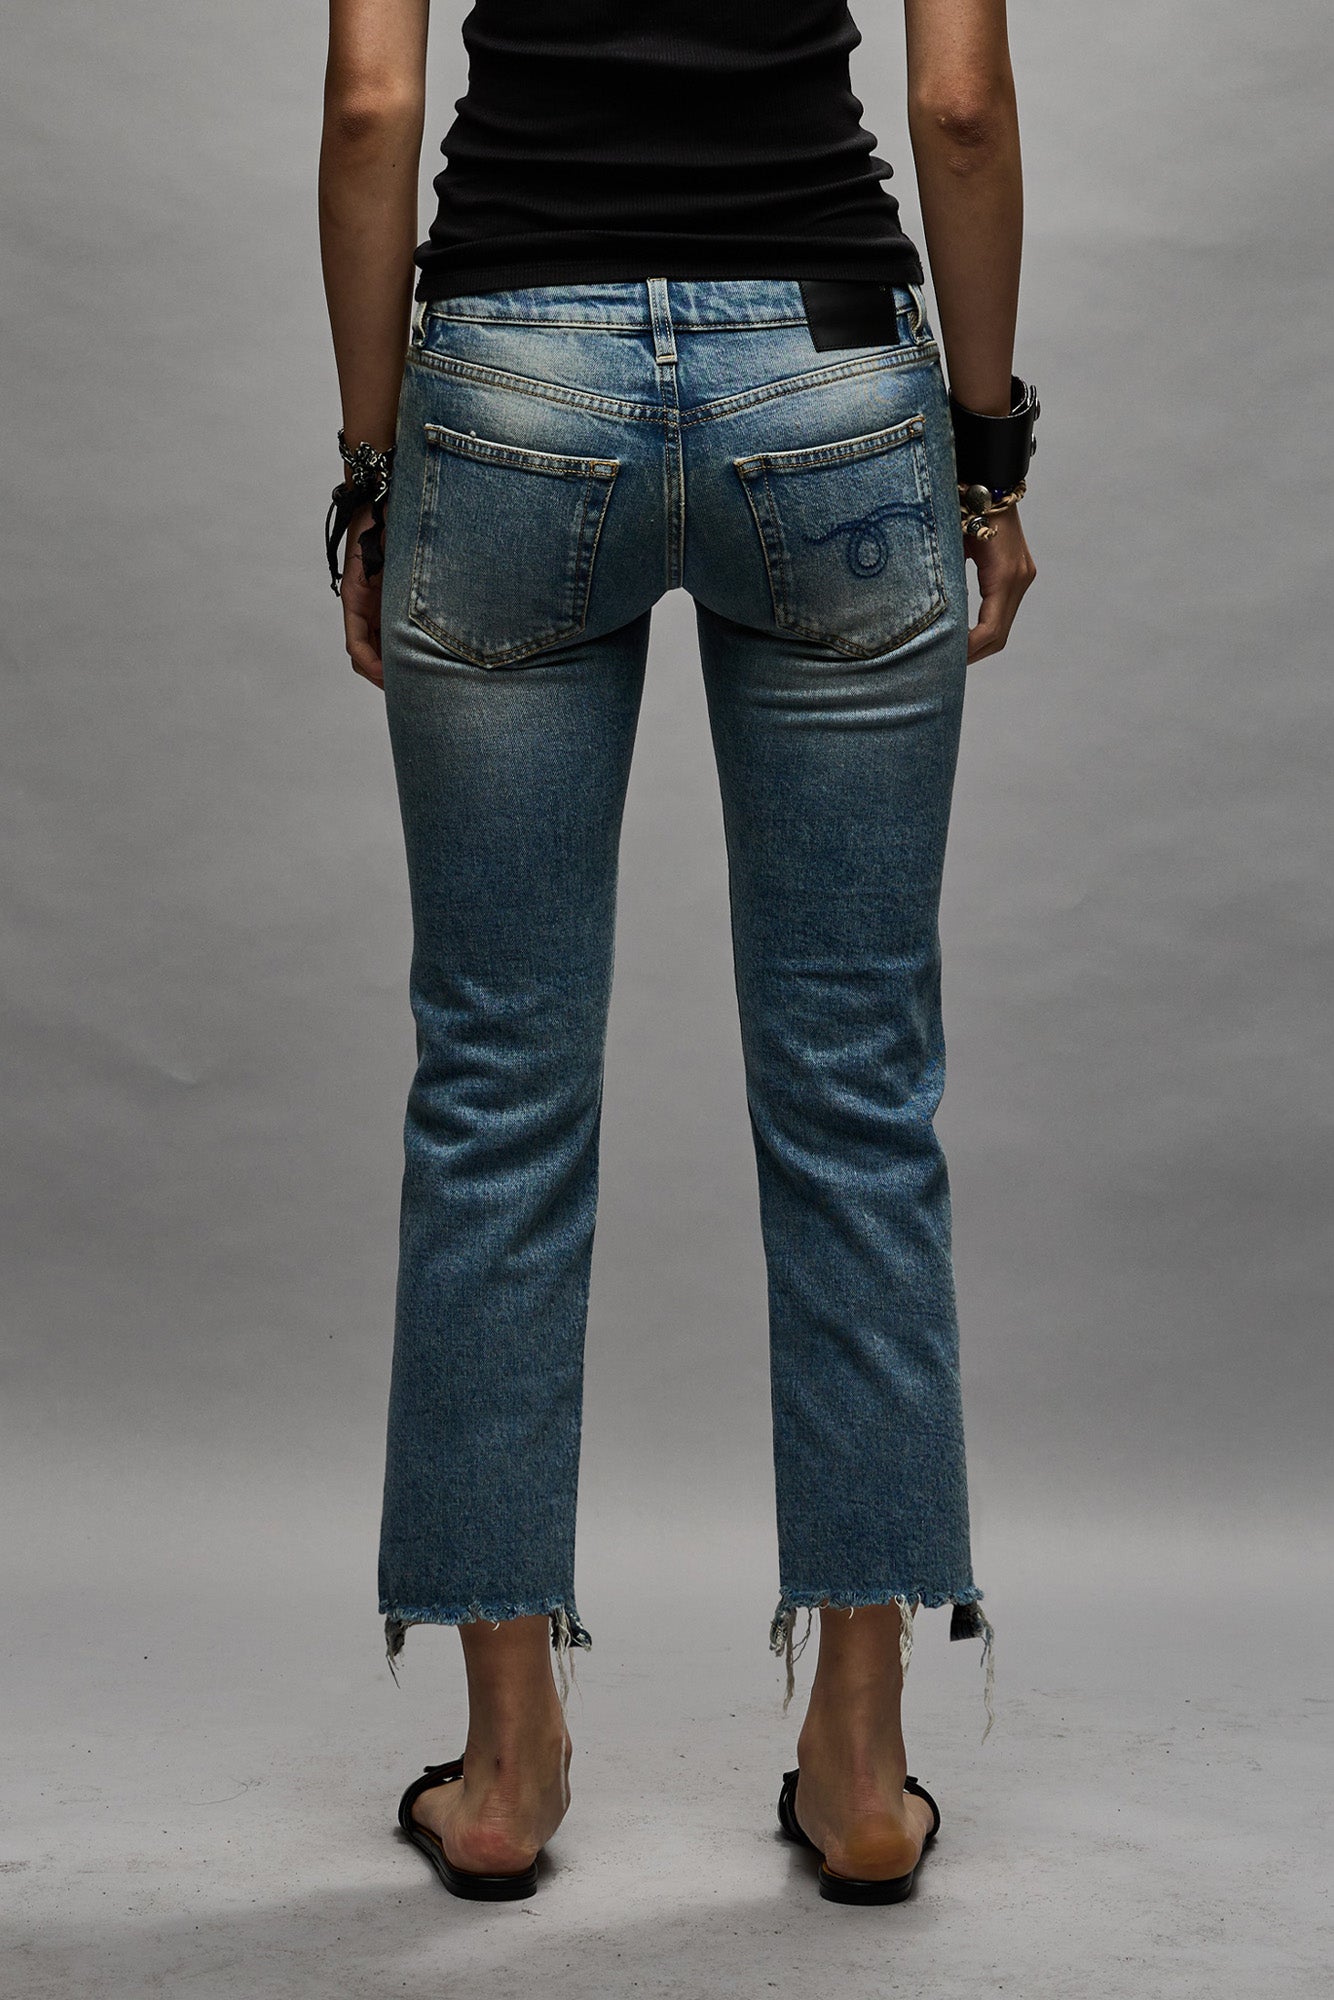 Idoravan Women's Plus Size Pants Clearance Womens Casual Tattered Fringed Jeans  Fashion Personality Street Trend Denim Pants 